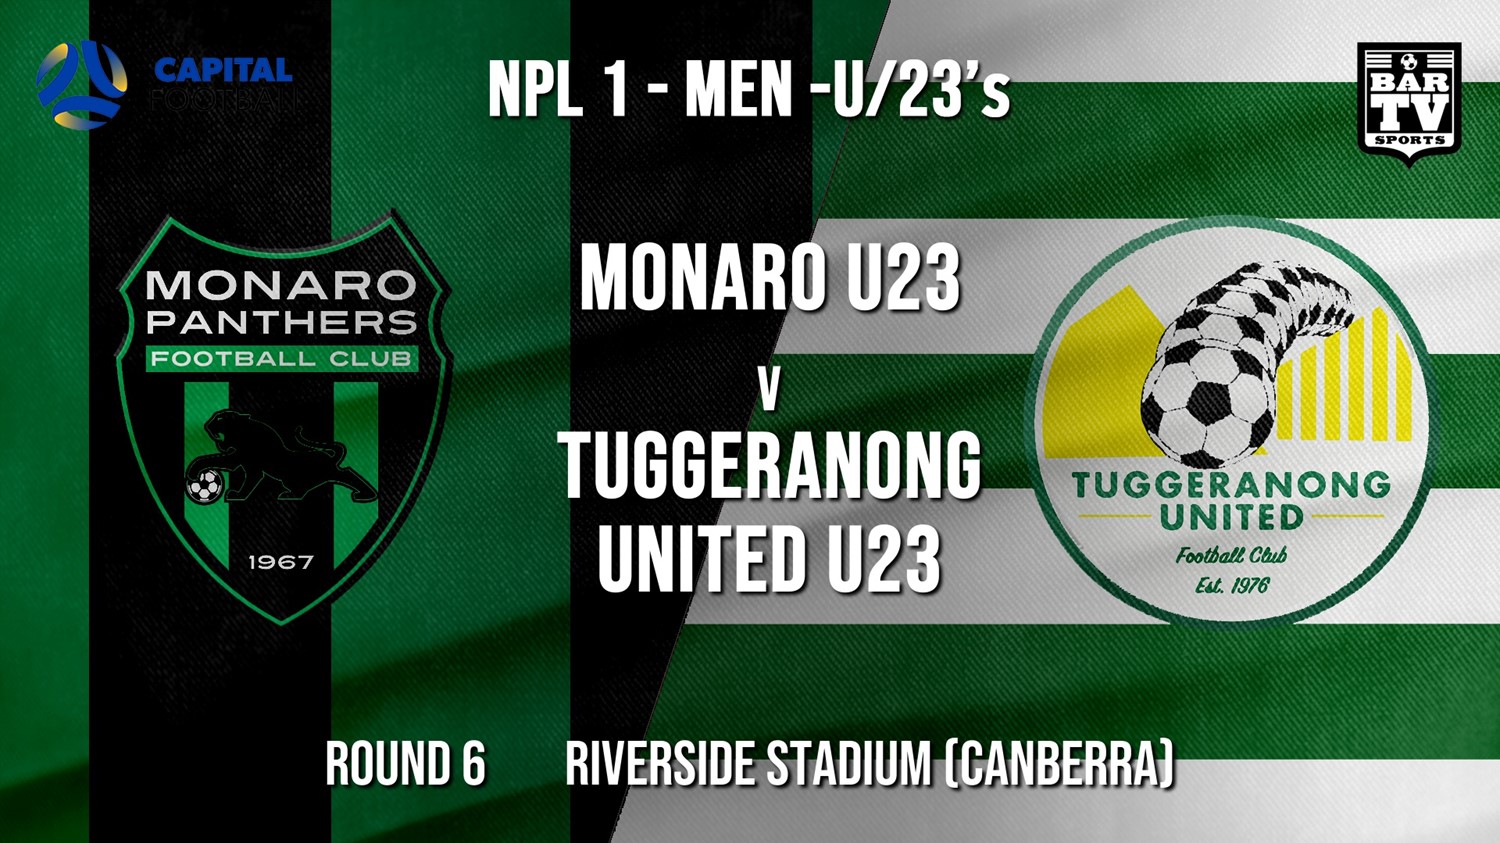 NPL1 Men - U23 - Capital Football  Round 6 - Monaro Panthers U23 v Tuggeranong United U23 Minigame Slate Image